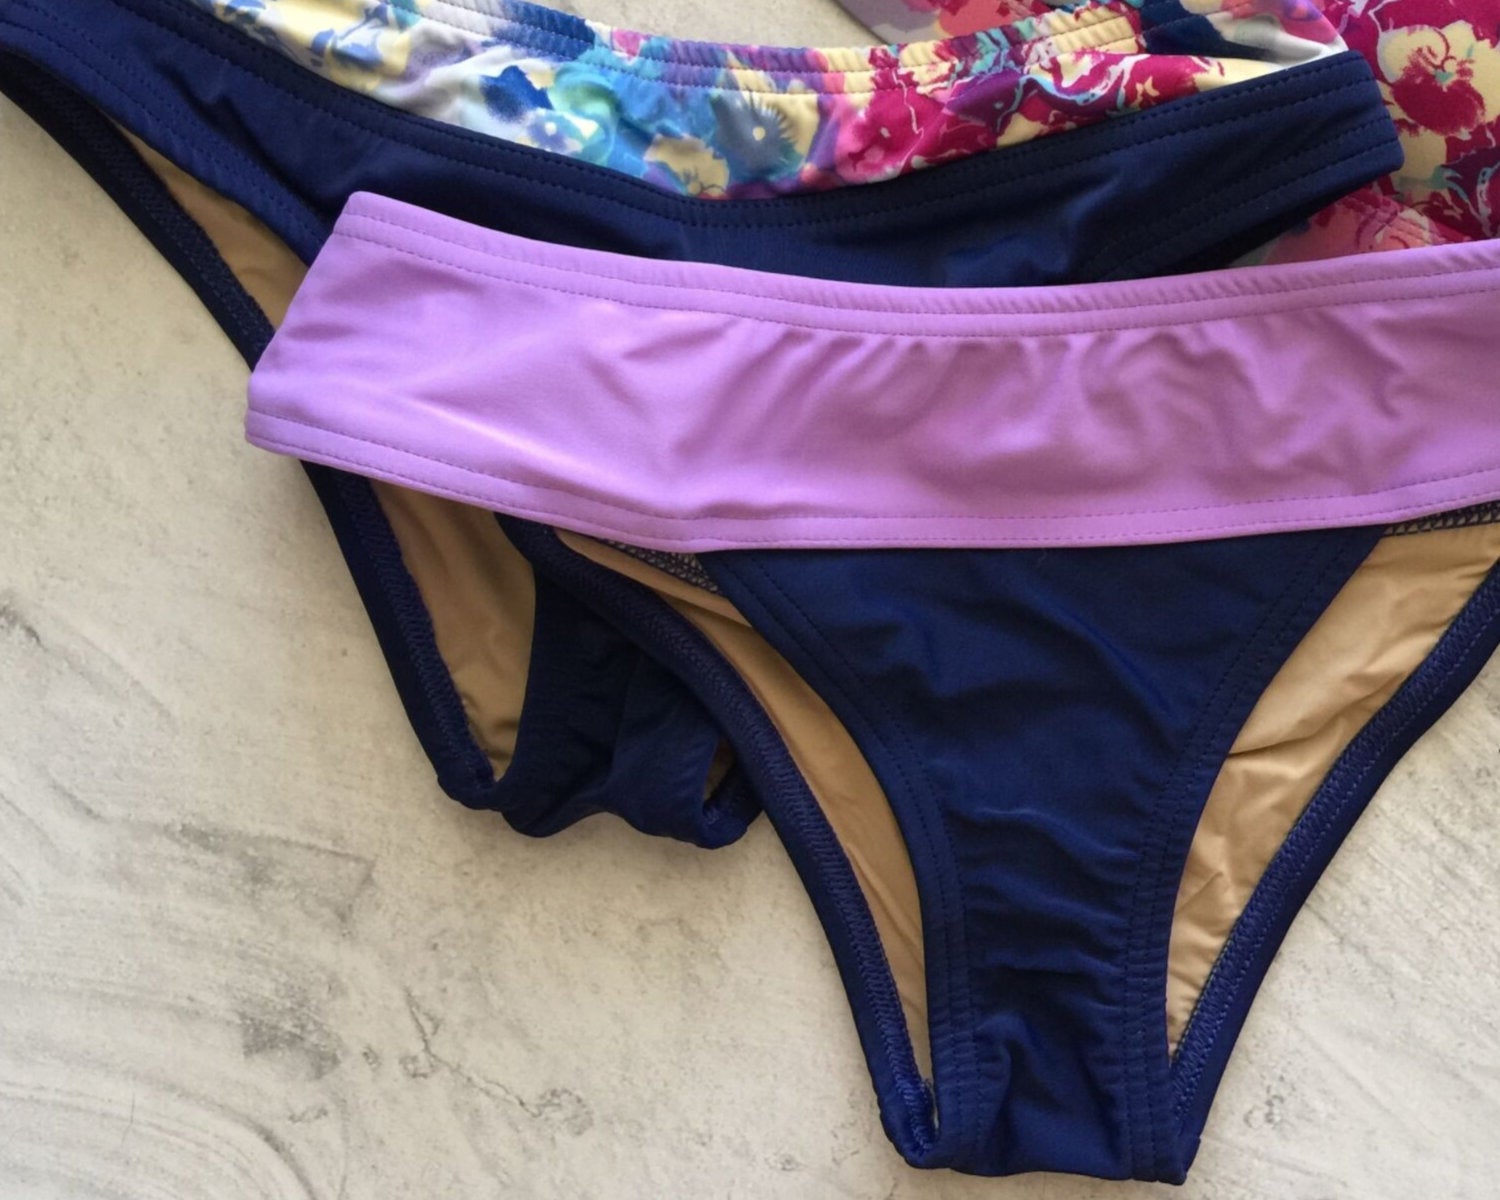 Women's Cheeky Cut Bikini Bottoms Sewing Pattern, Ladies